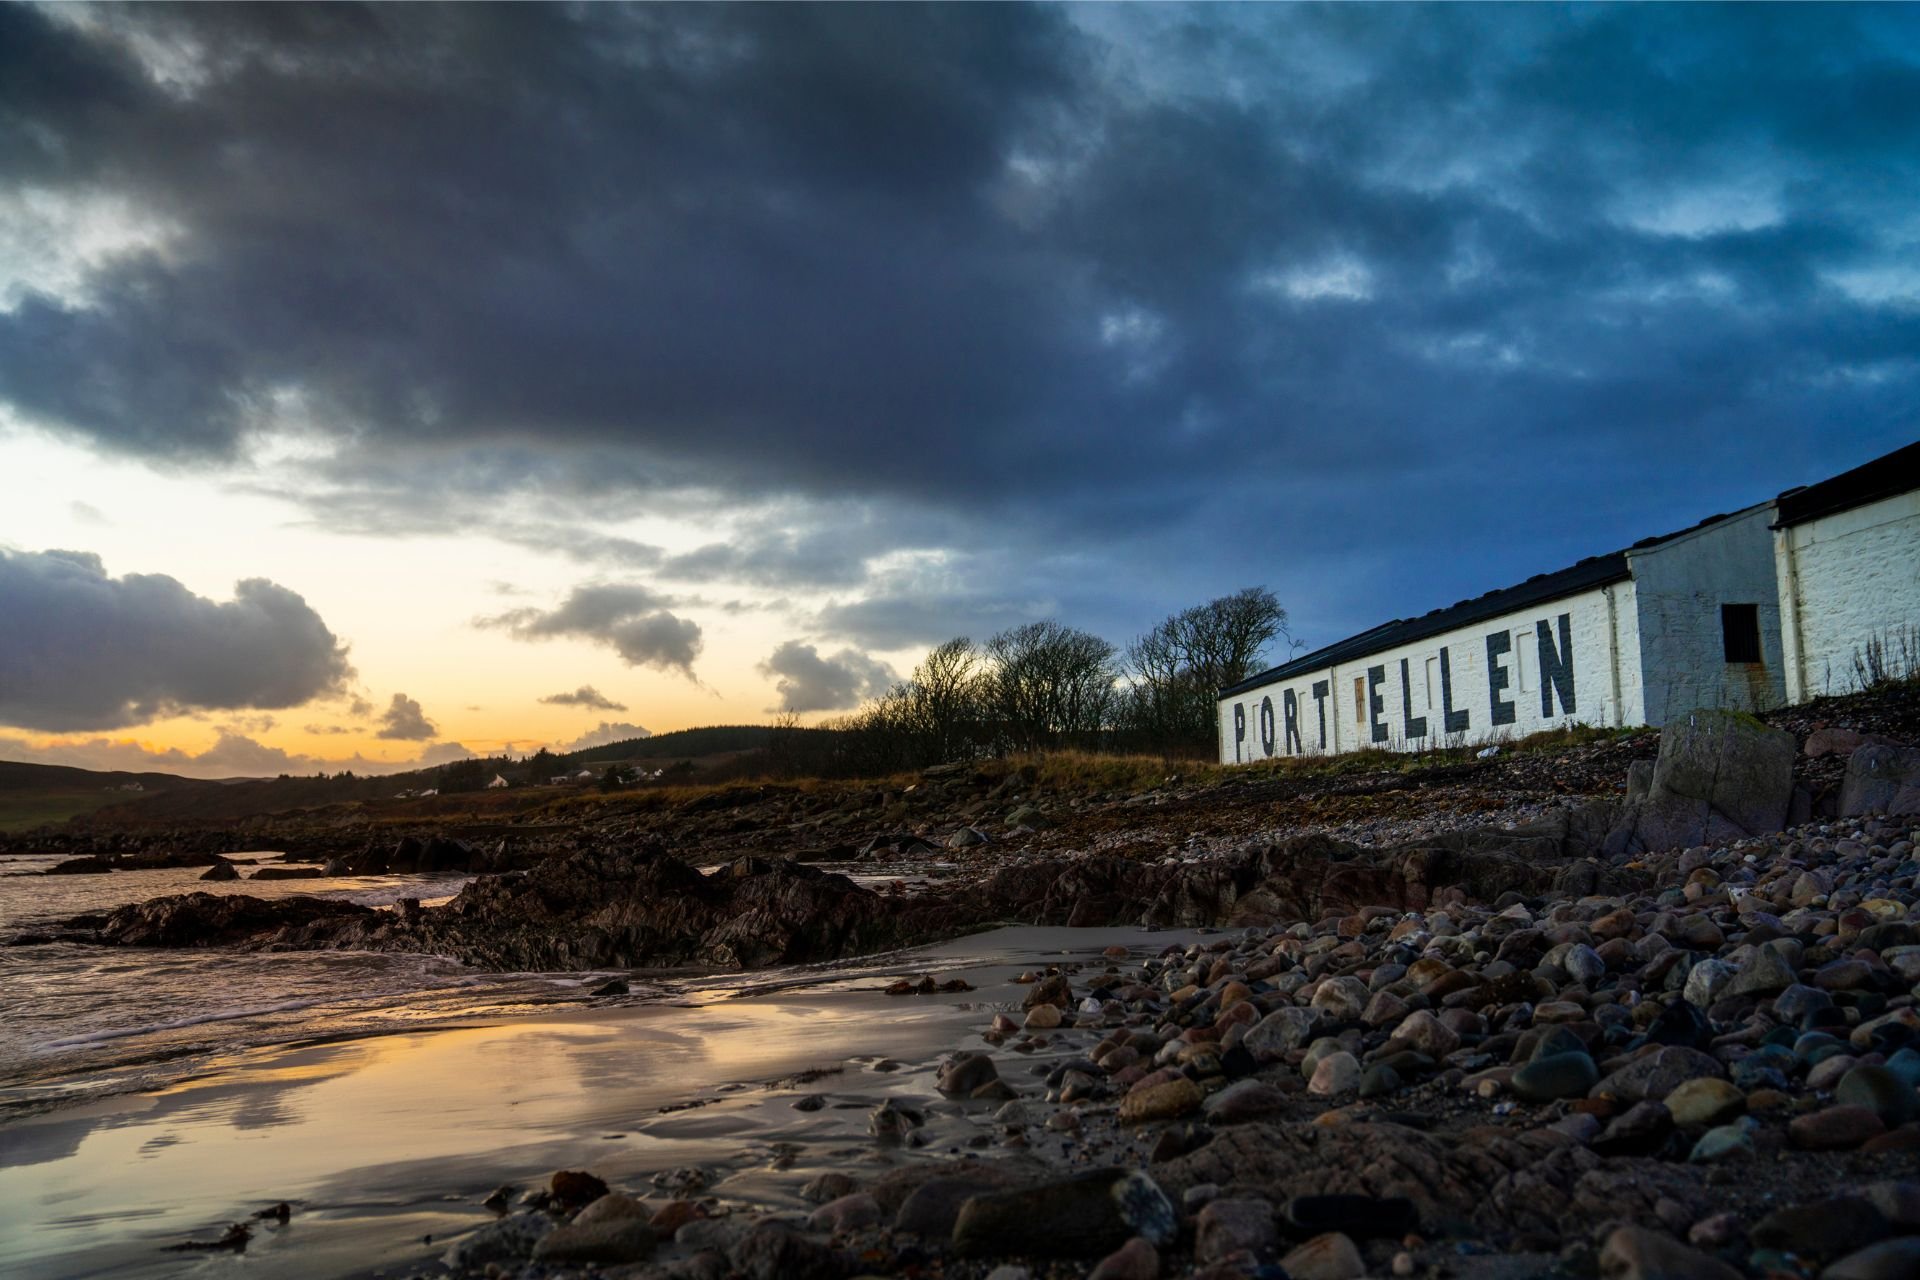 The Port Ellen Distillery in Scotland